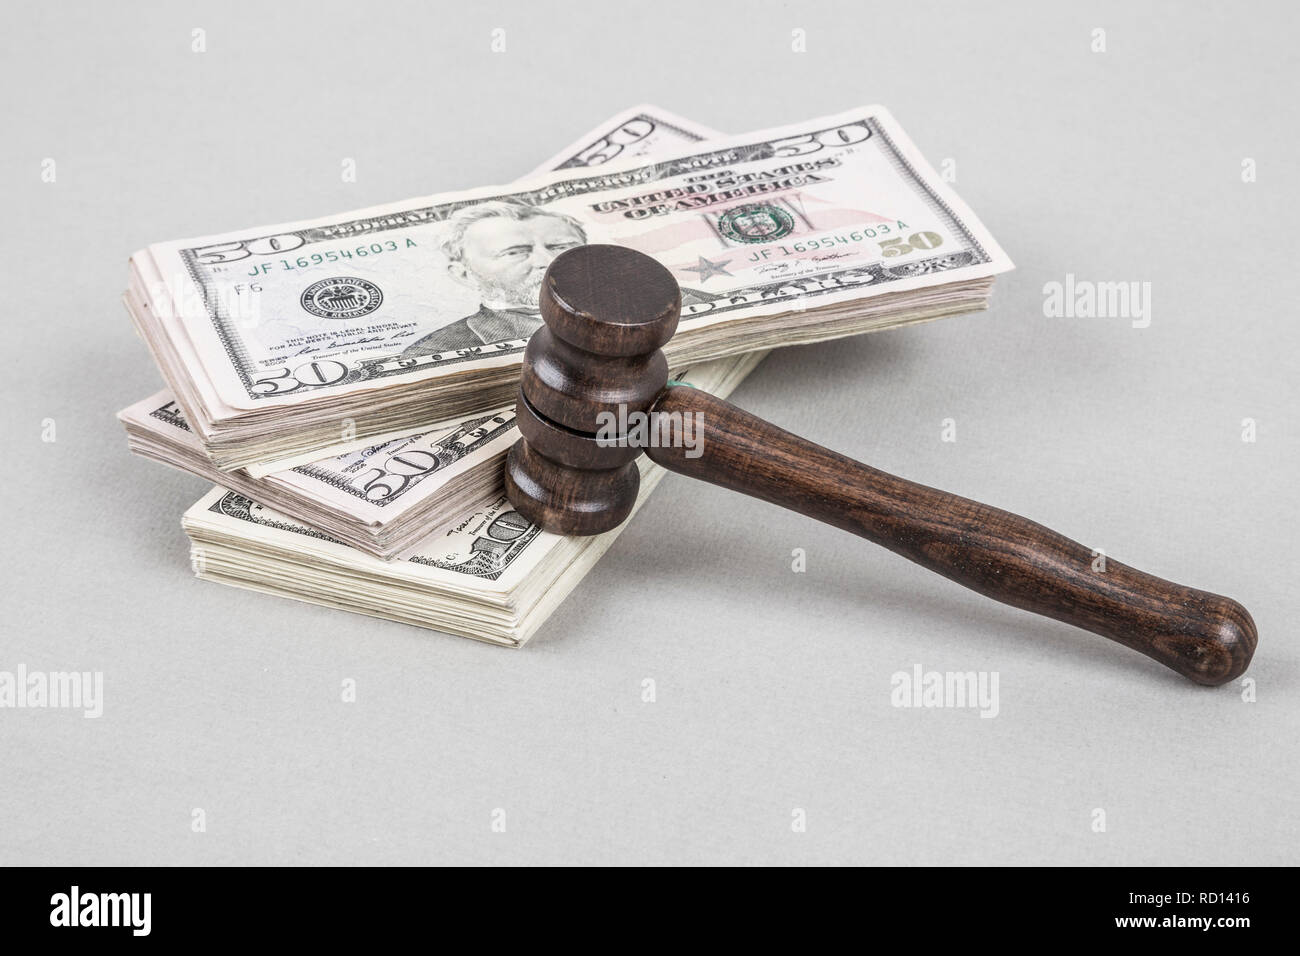 Wooden gavel on American Dollars on grey Stock Photo